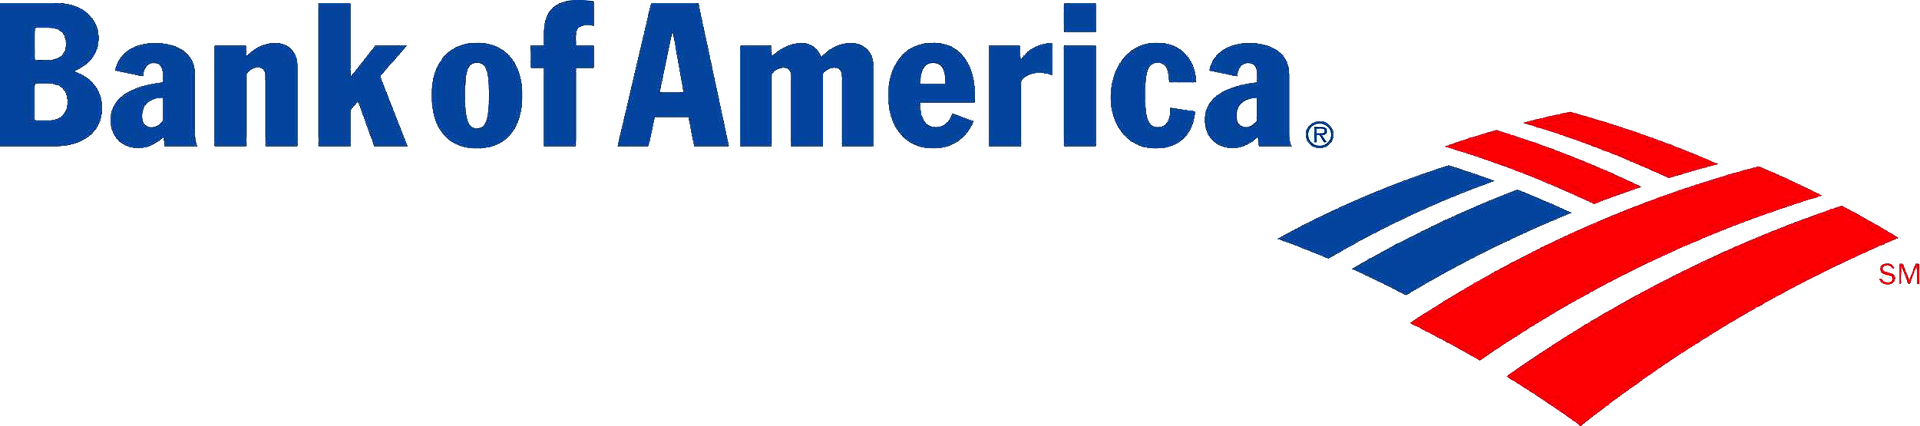 california and bank of america png logo #4540